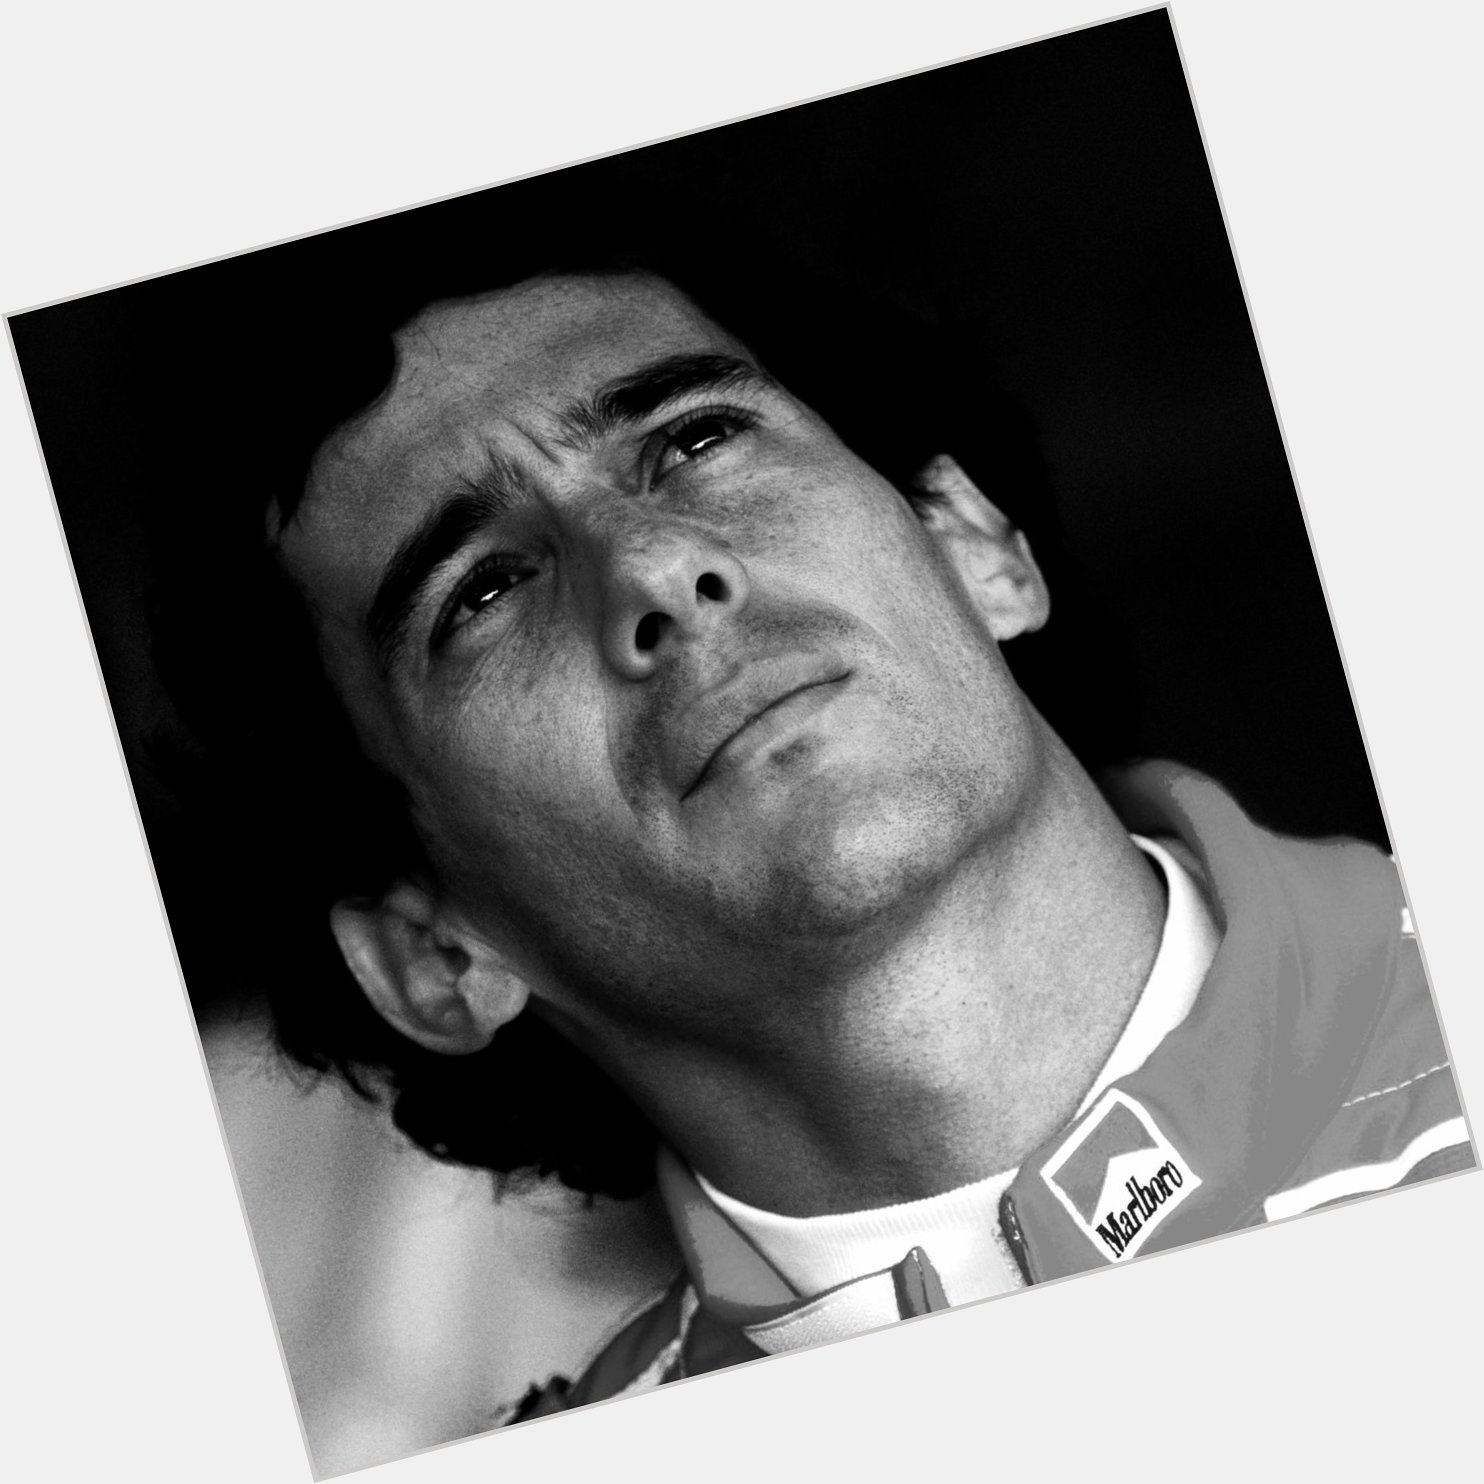    55 years ago, three-time champion Ayrton Senna was born happy birthday legend :)